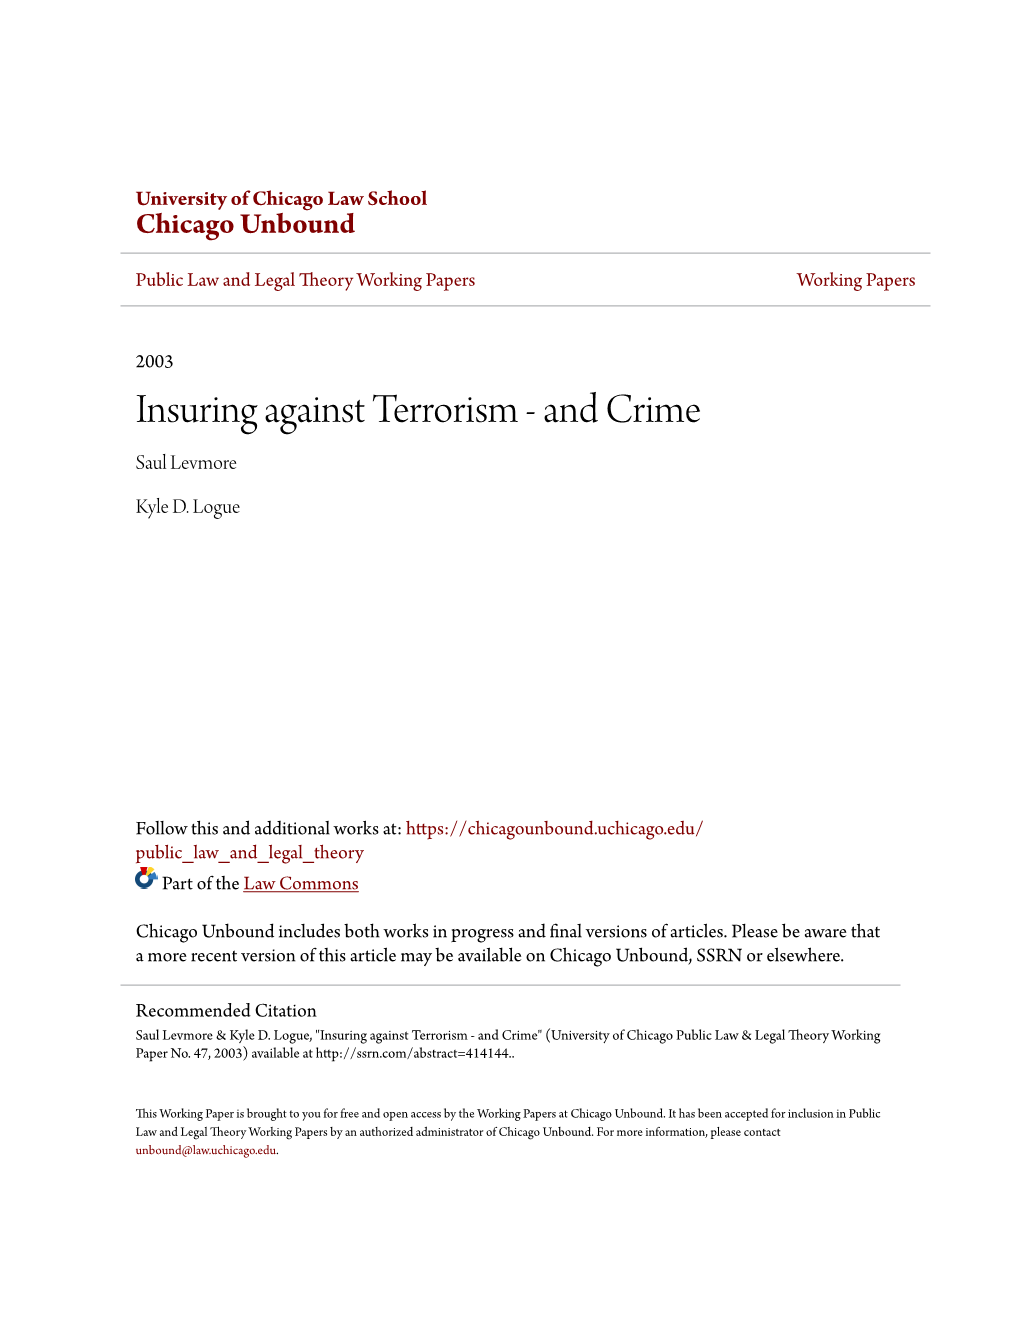 Insuring Against Terrorism - and Crime Saul Levmore